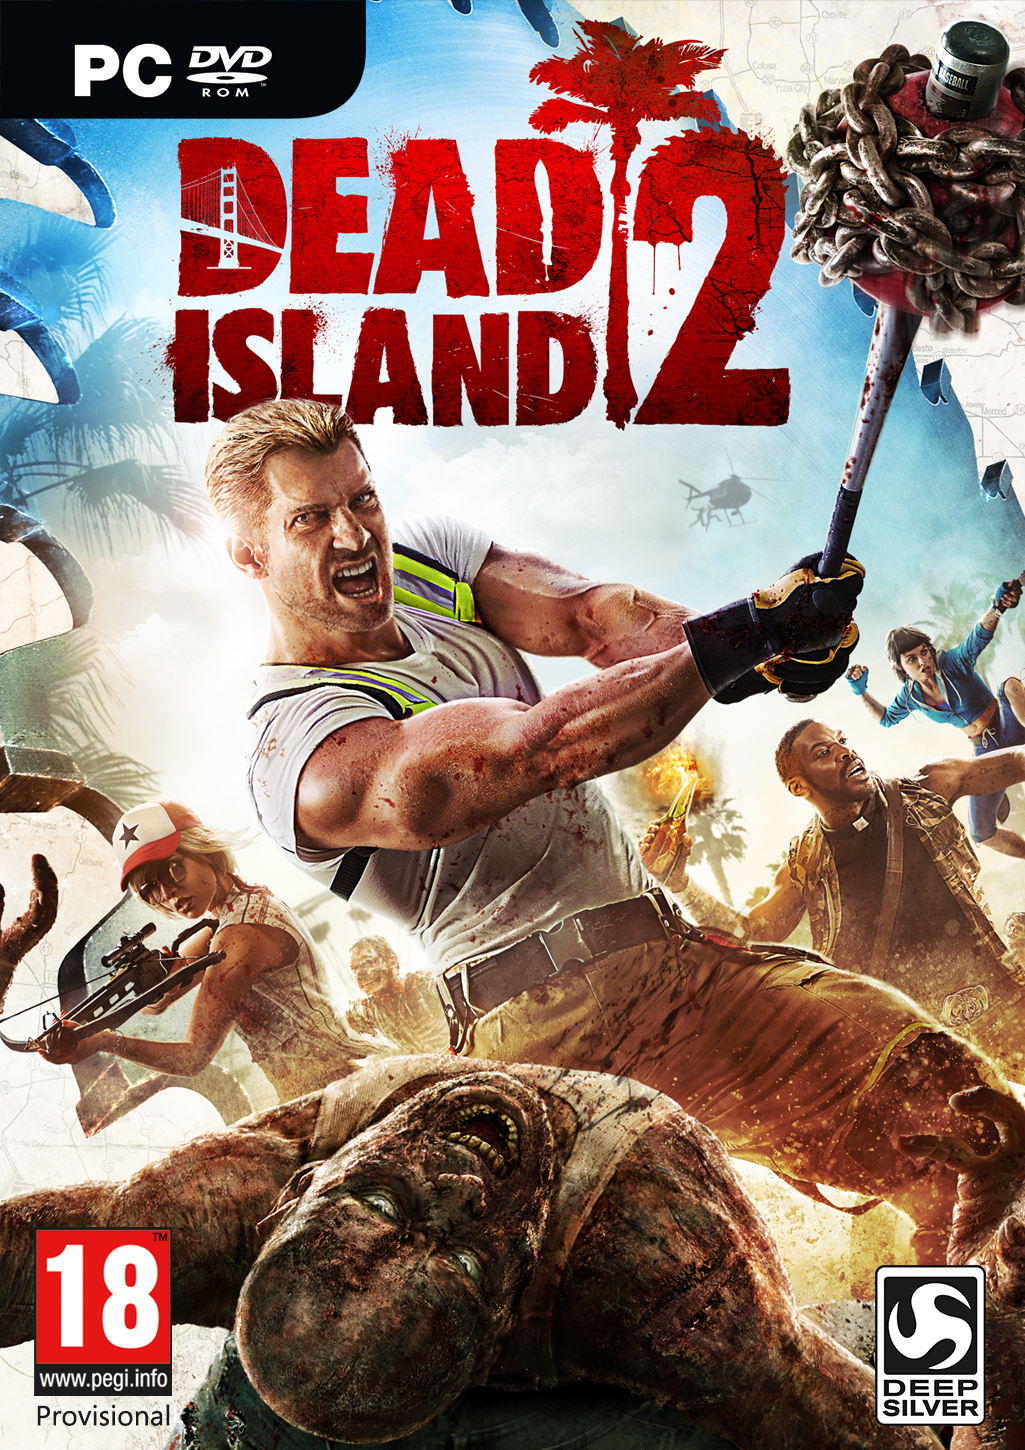 Dead Island 2 DLC Unveiled